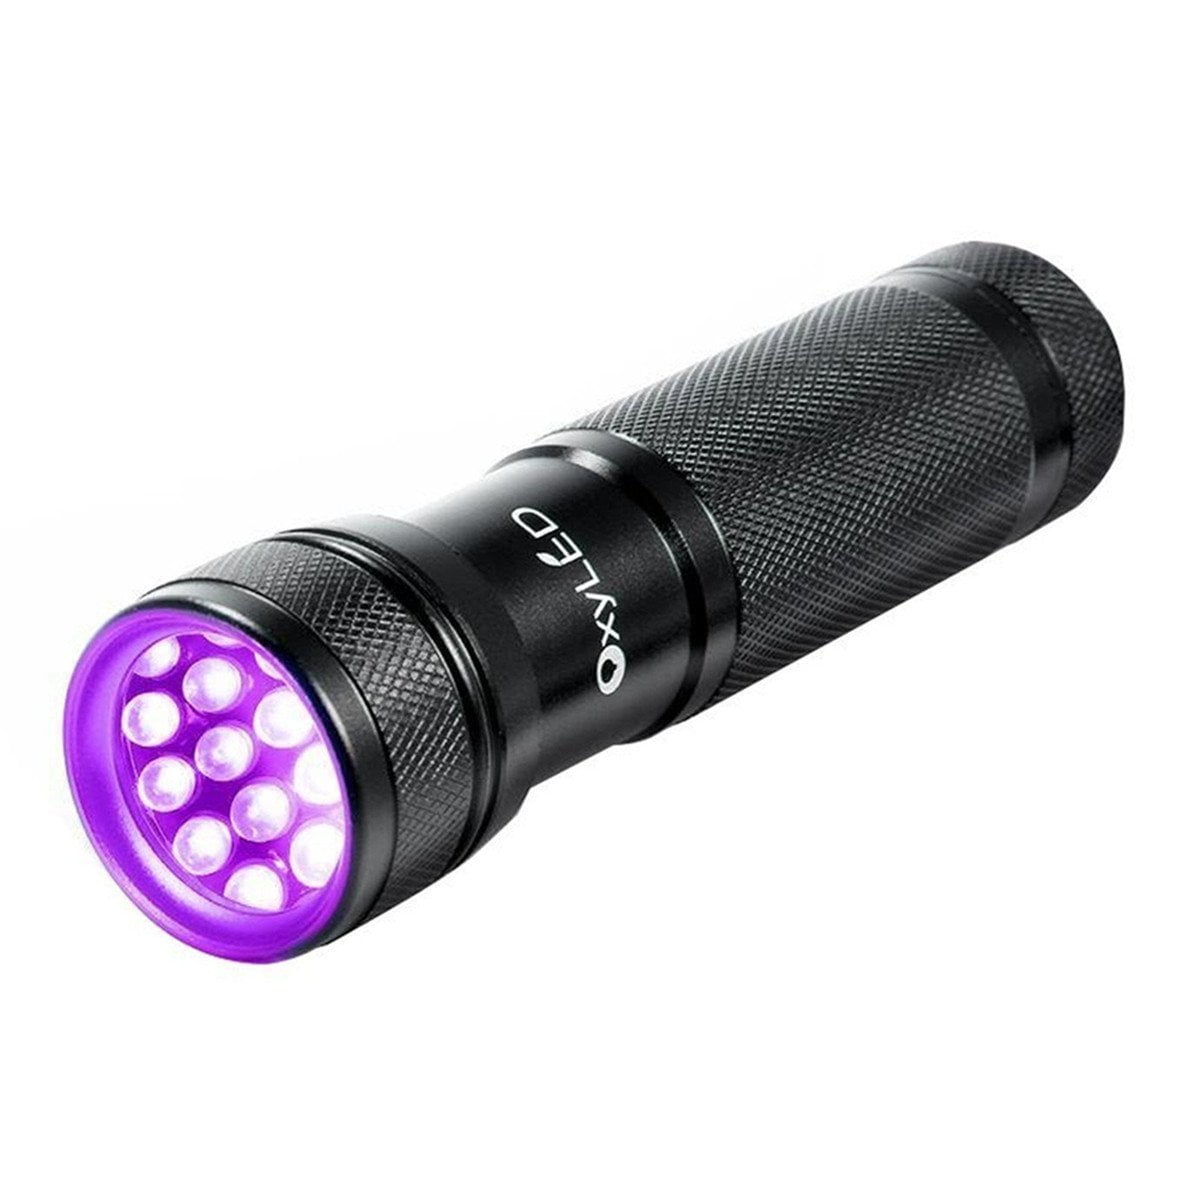 Details about  / UV Ultra Violet LED Flashlight Black Light 395 NM Inspection Lamp zoombar pe Zoombar data-mtsrclang=en-US href=# onclick=return false; 							show original title